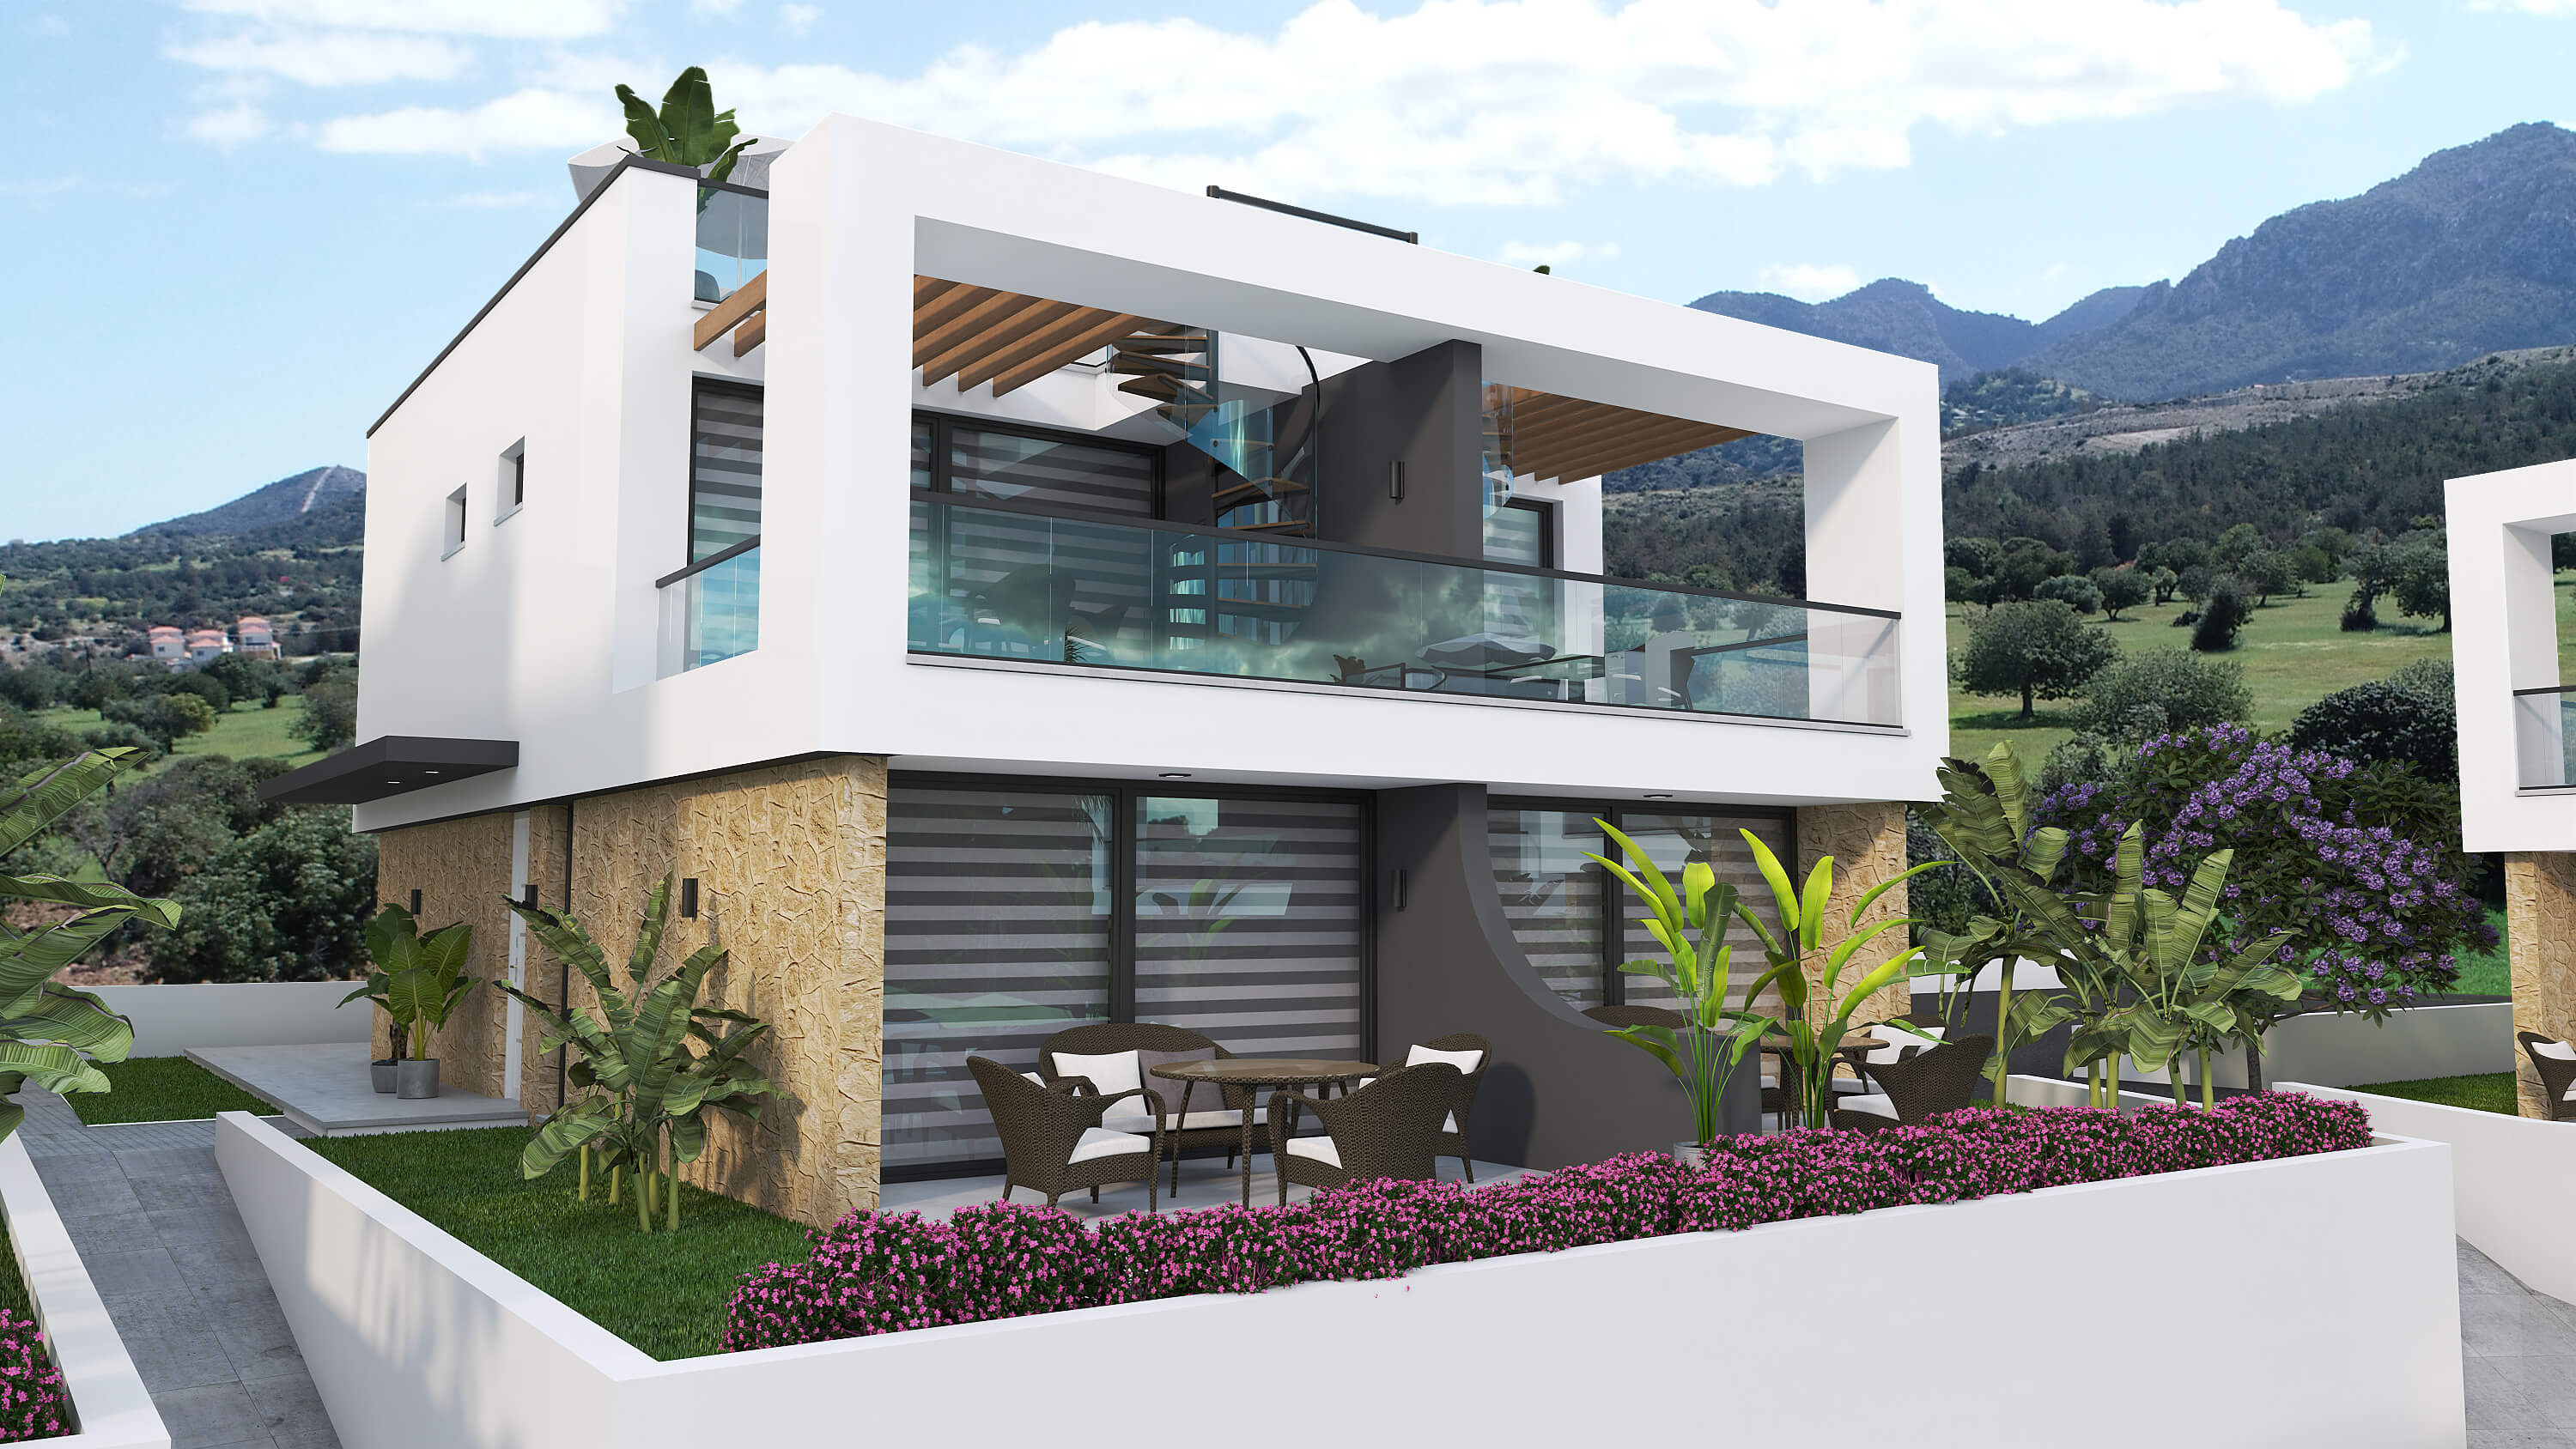 2 bedrooms apartment in semi detached villa in new project